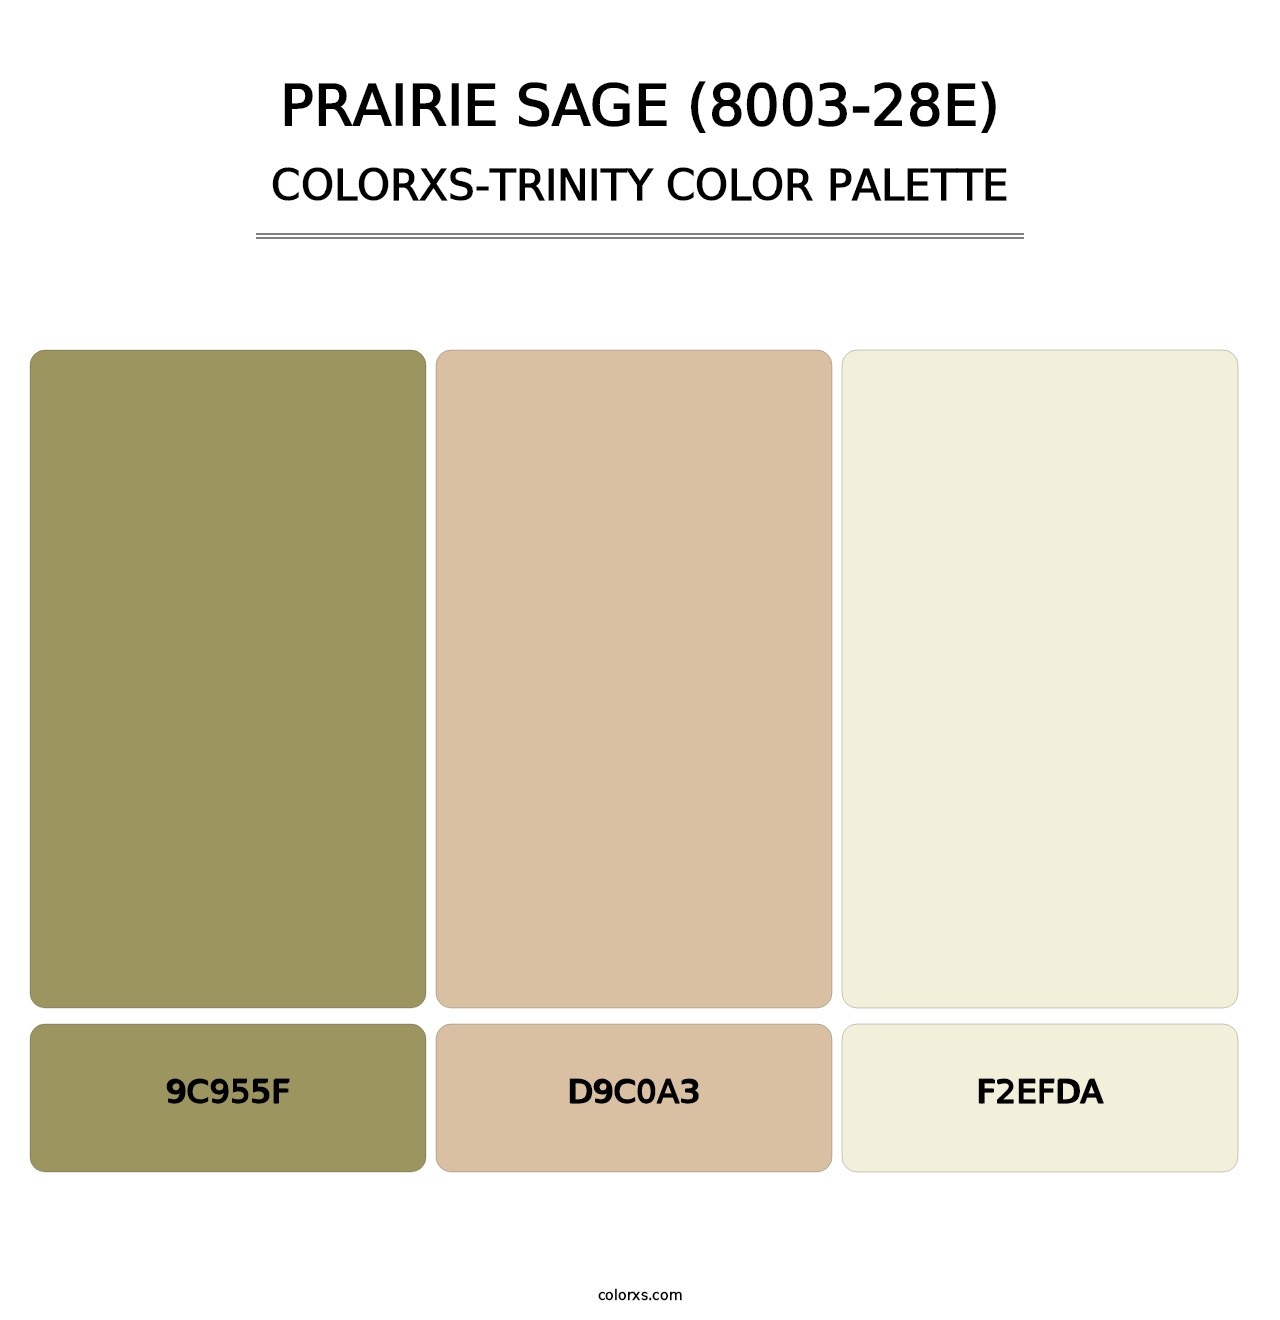 Prairie Sage (8003-28E) - Colorxs Trinity Palette